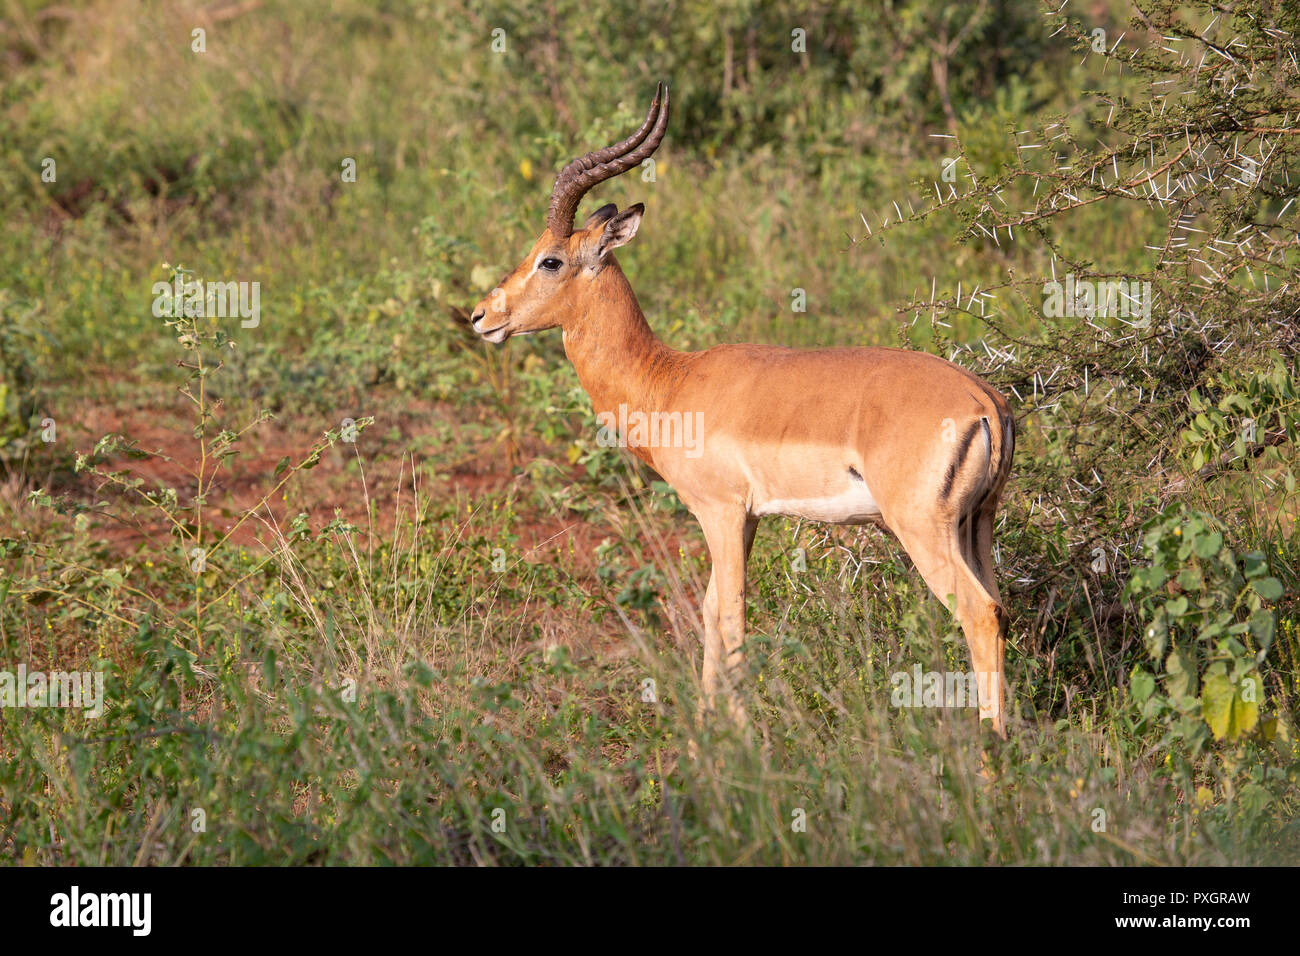 Ram Impala Aepyceros melampus in Buschland in Südafrika Stockfoto